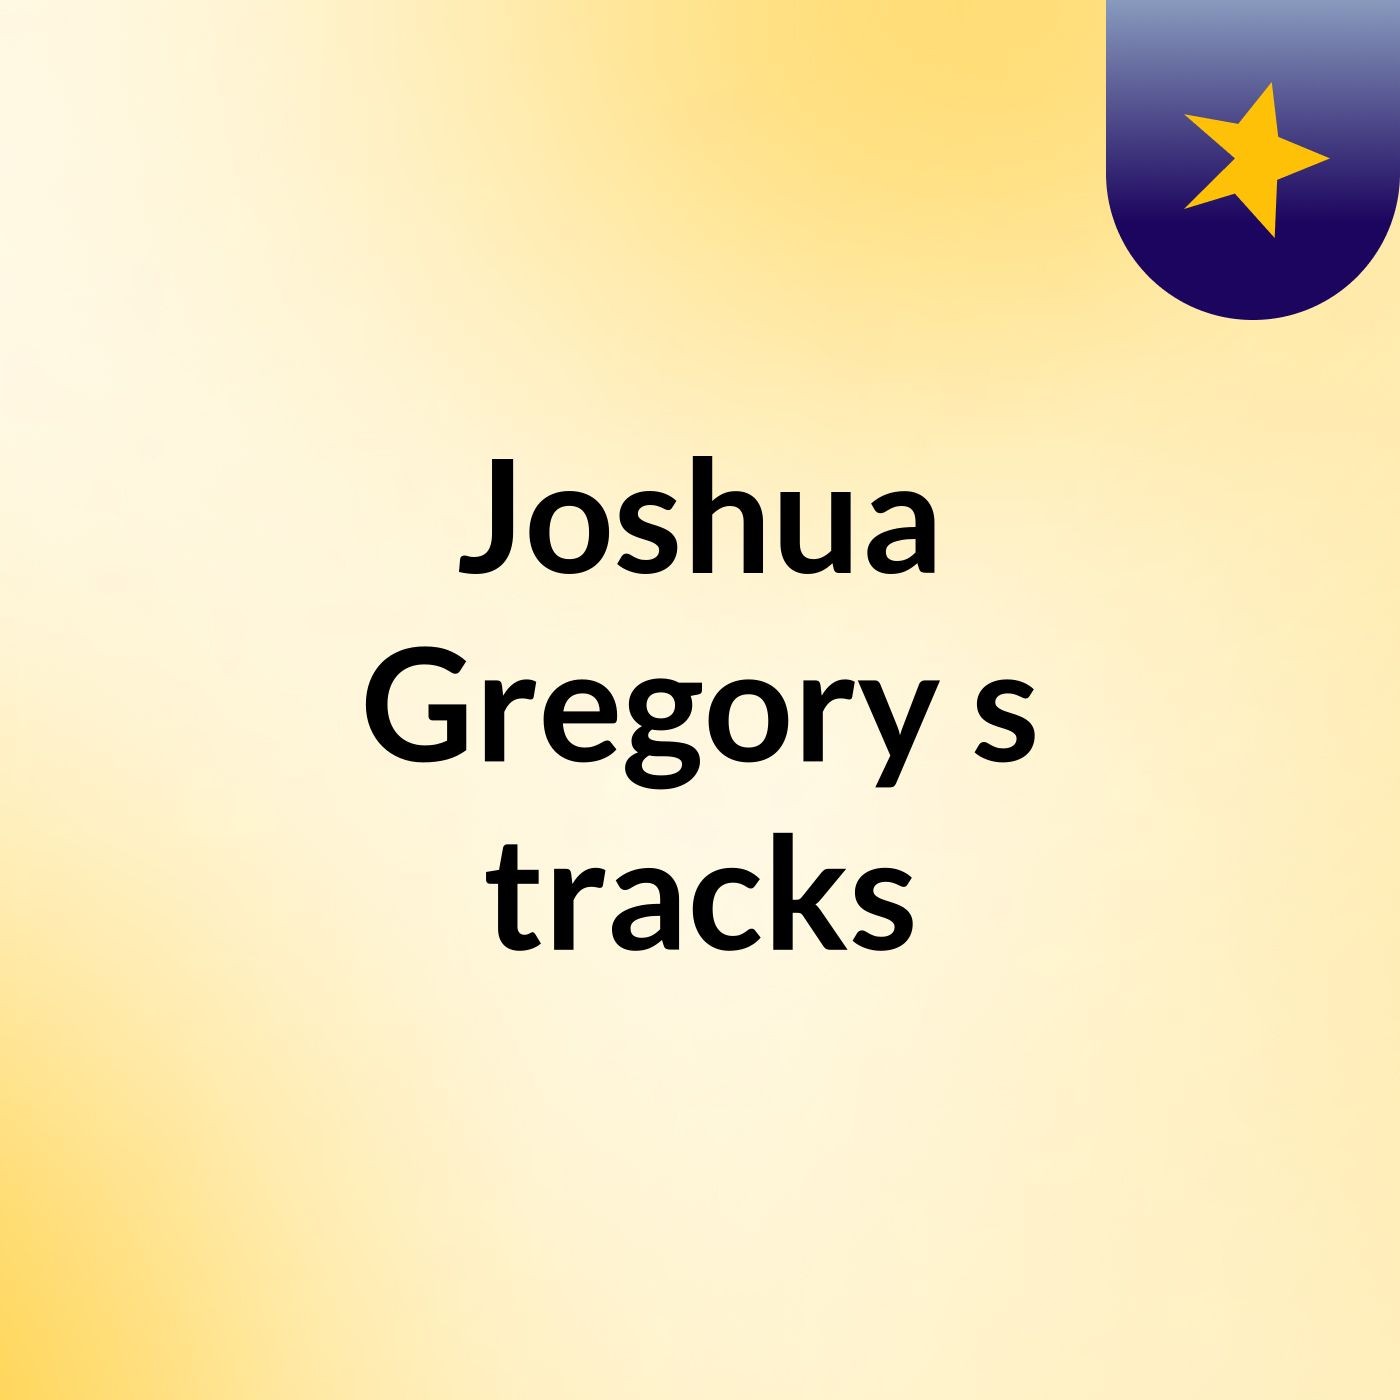 Joshua Gregory's tracks